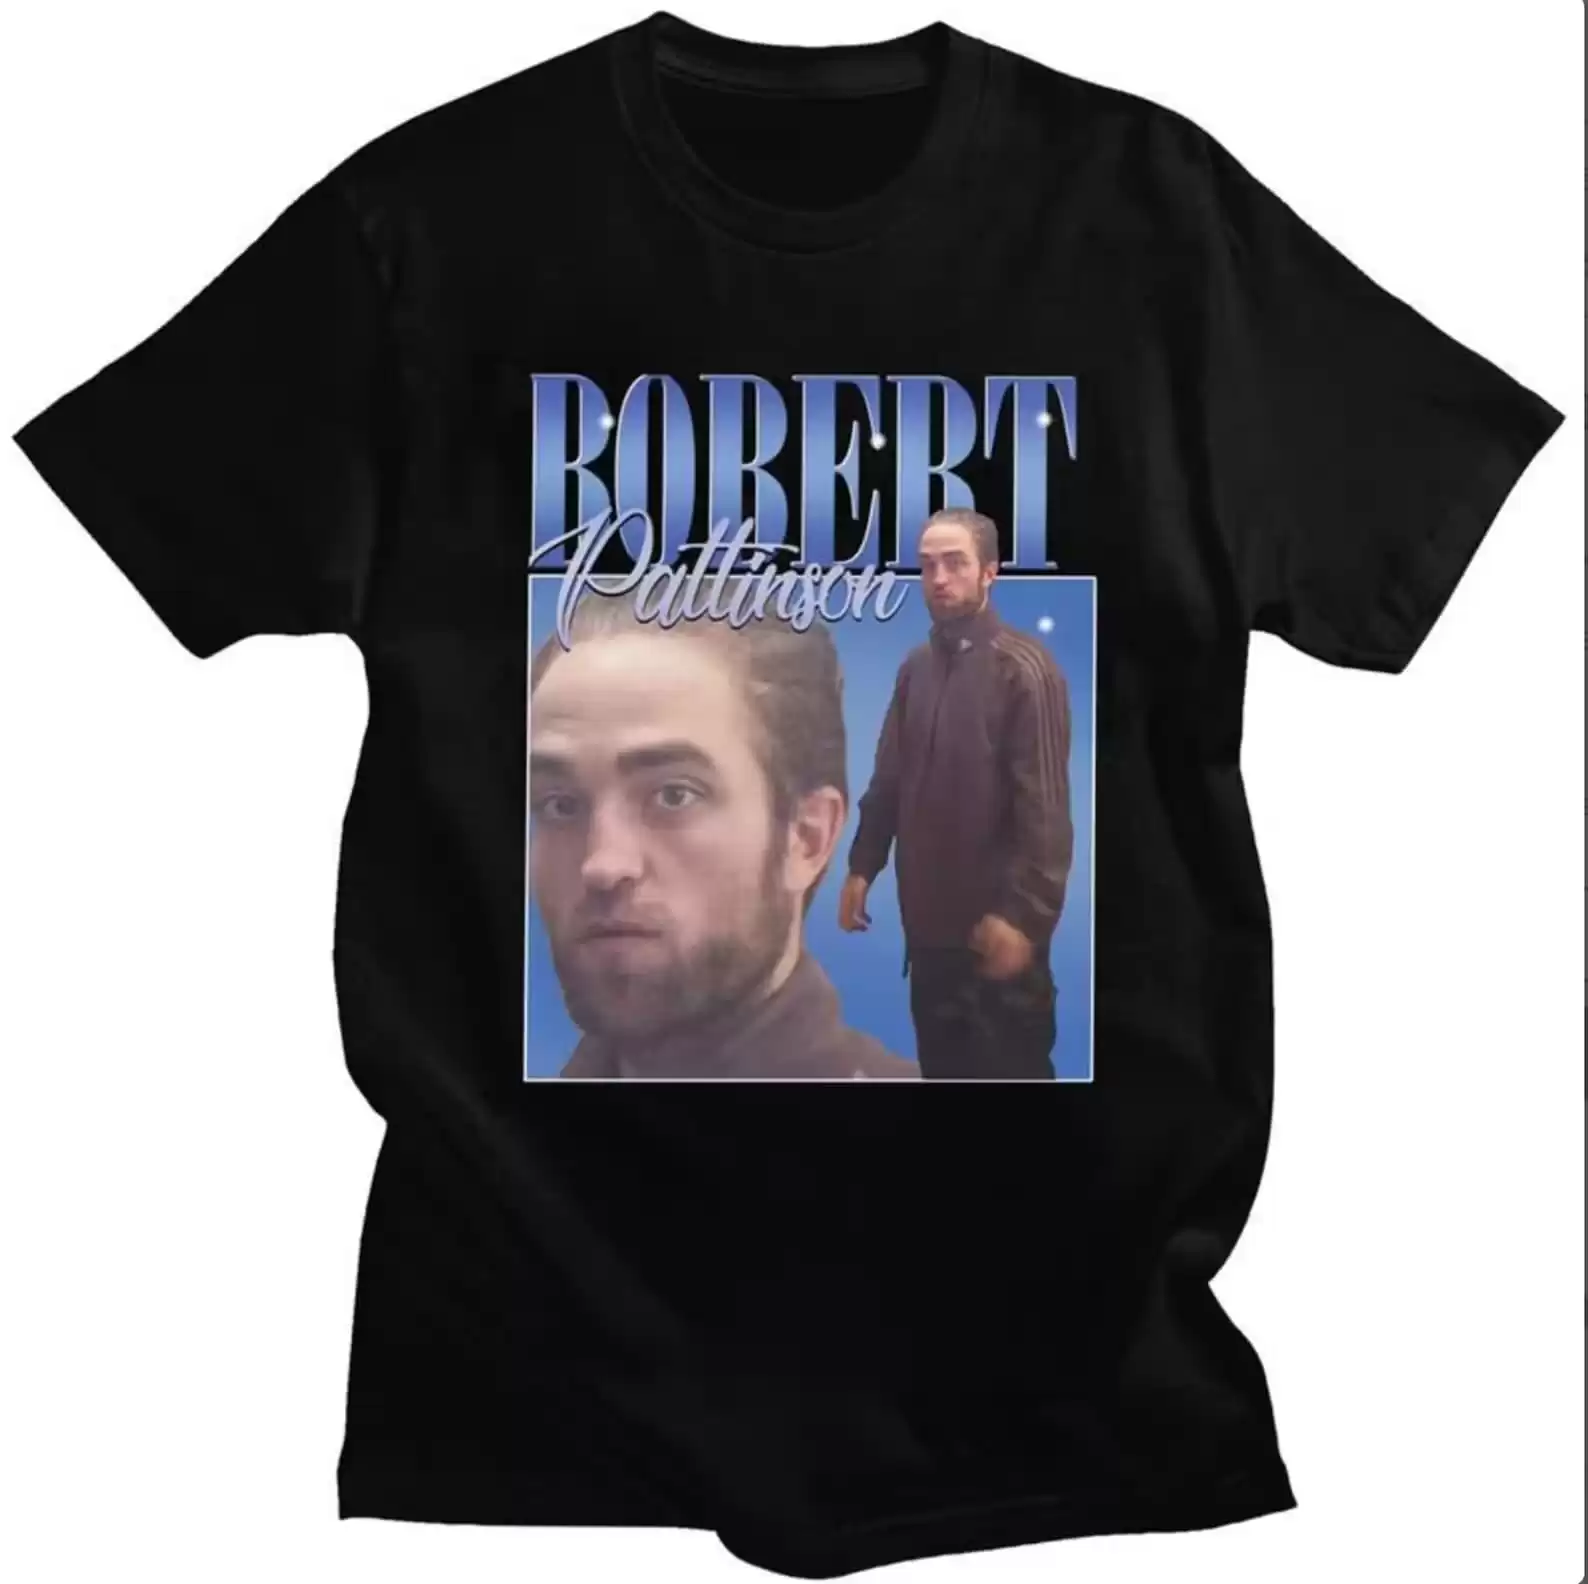 Funny Robert Pattinson Meme T-shirts